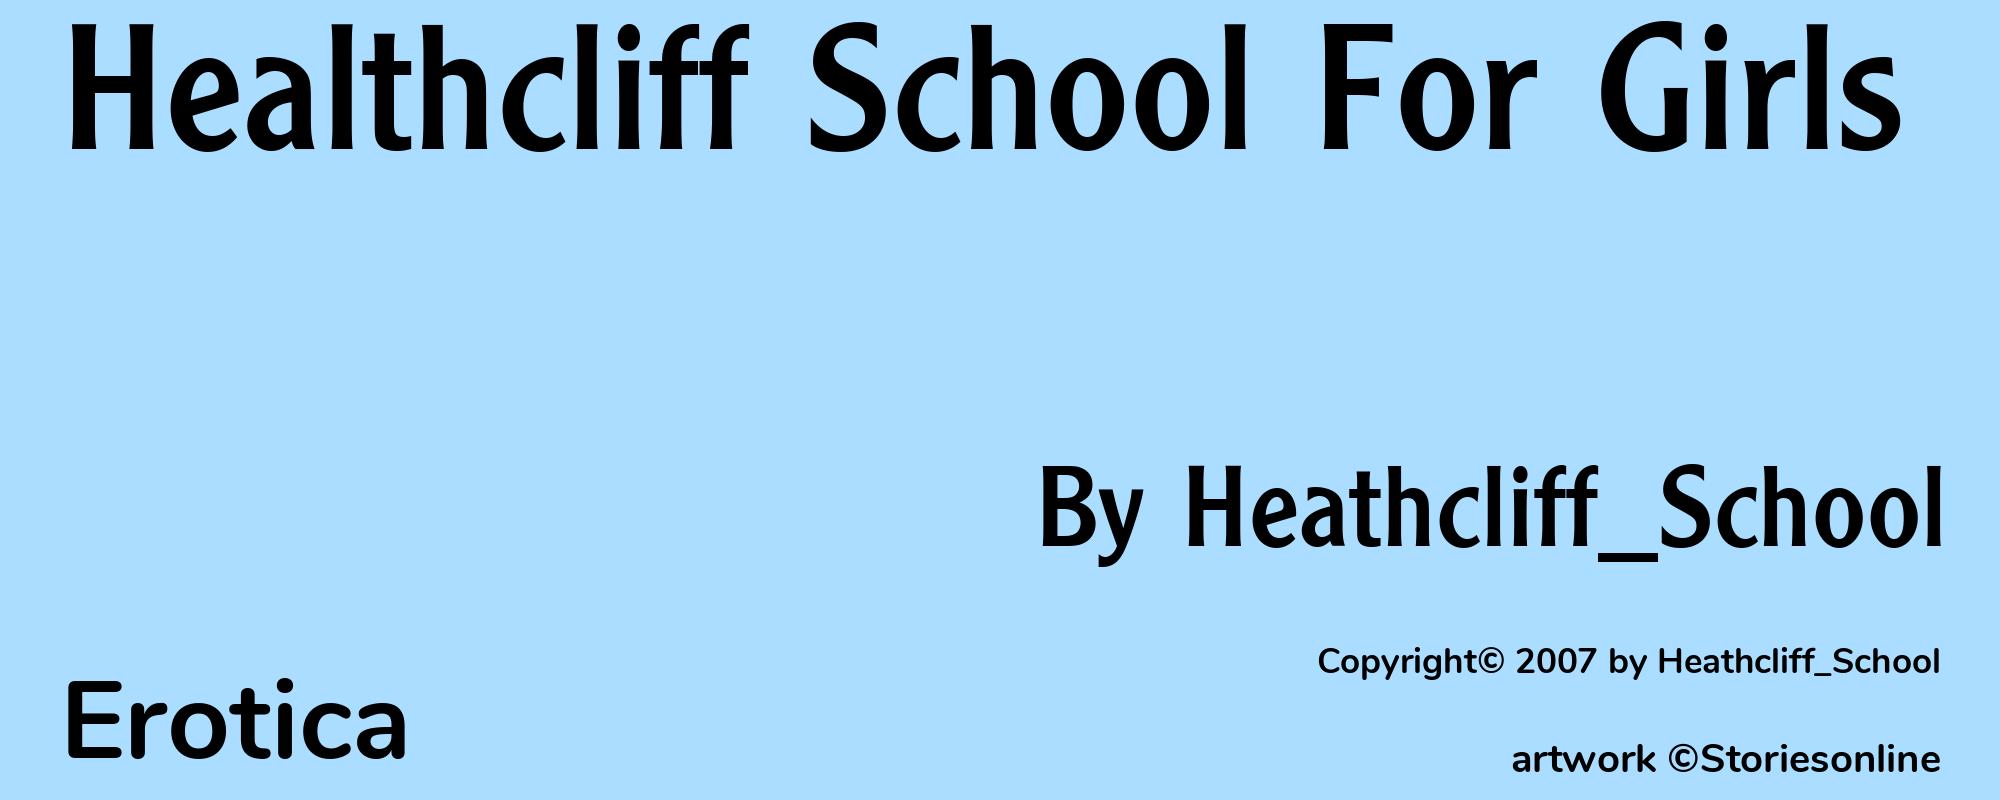 Healthcliff School For Girls - Cover